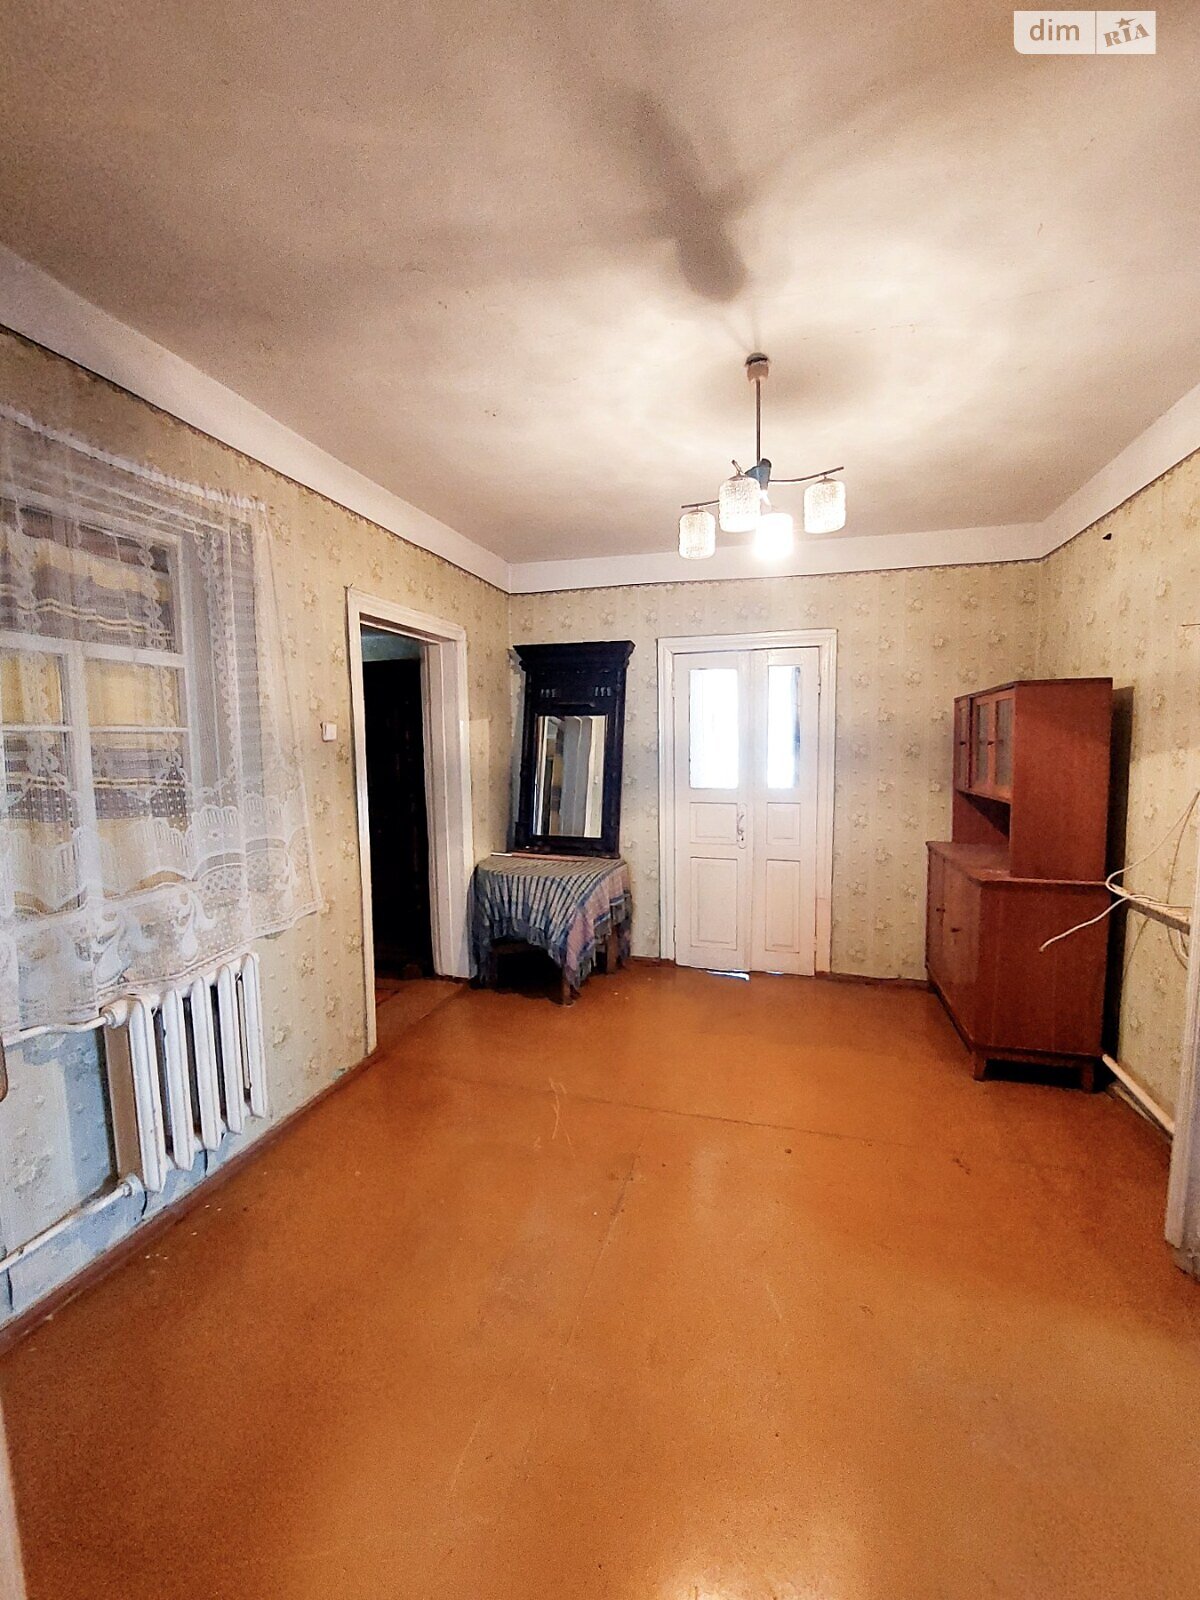 Продажа части дома в Черкассах, переулок Кирпичный, район Район Д, 4 комнаты фото 1